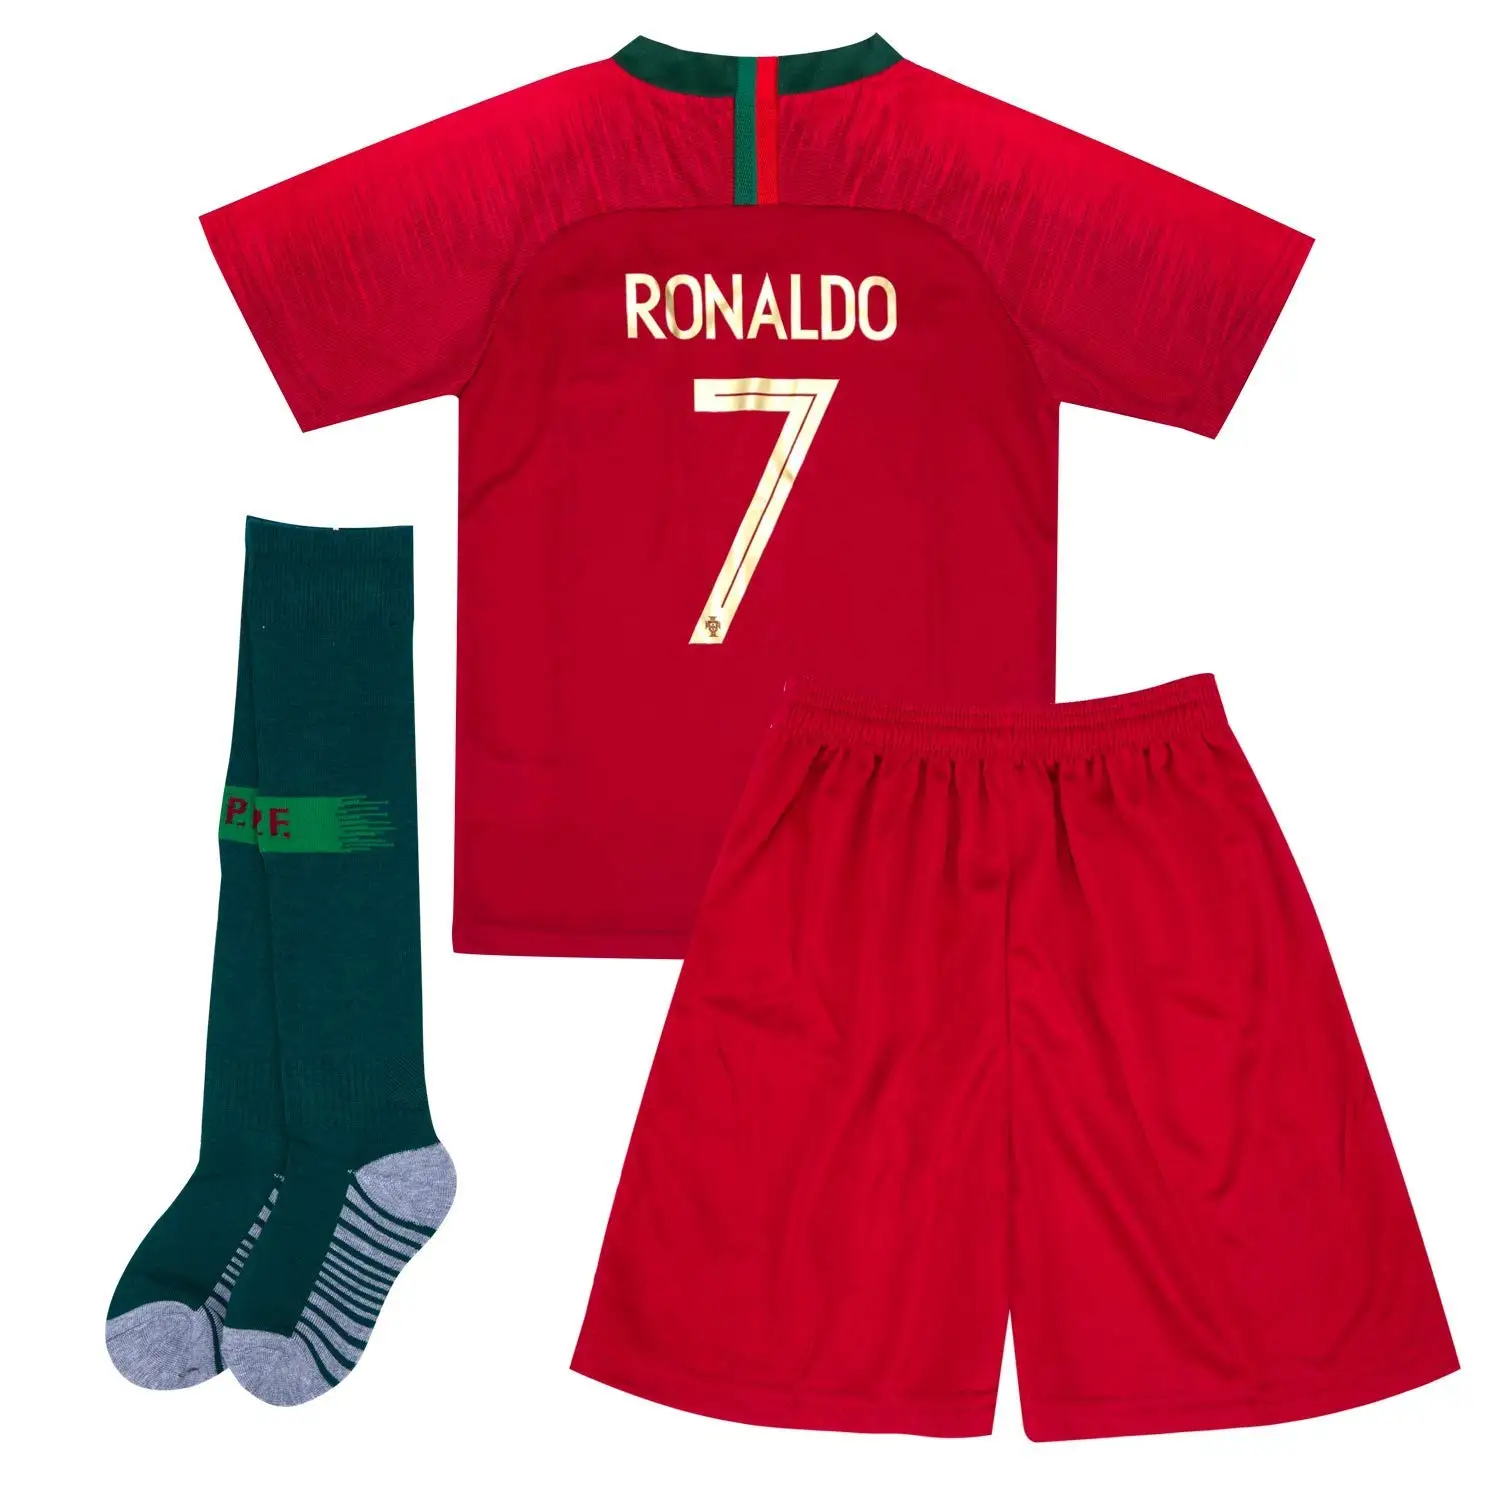 ronaldo soccer jersey youth